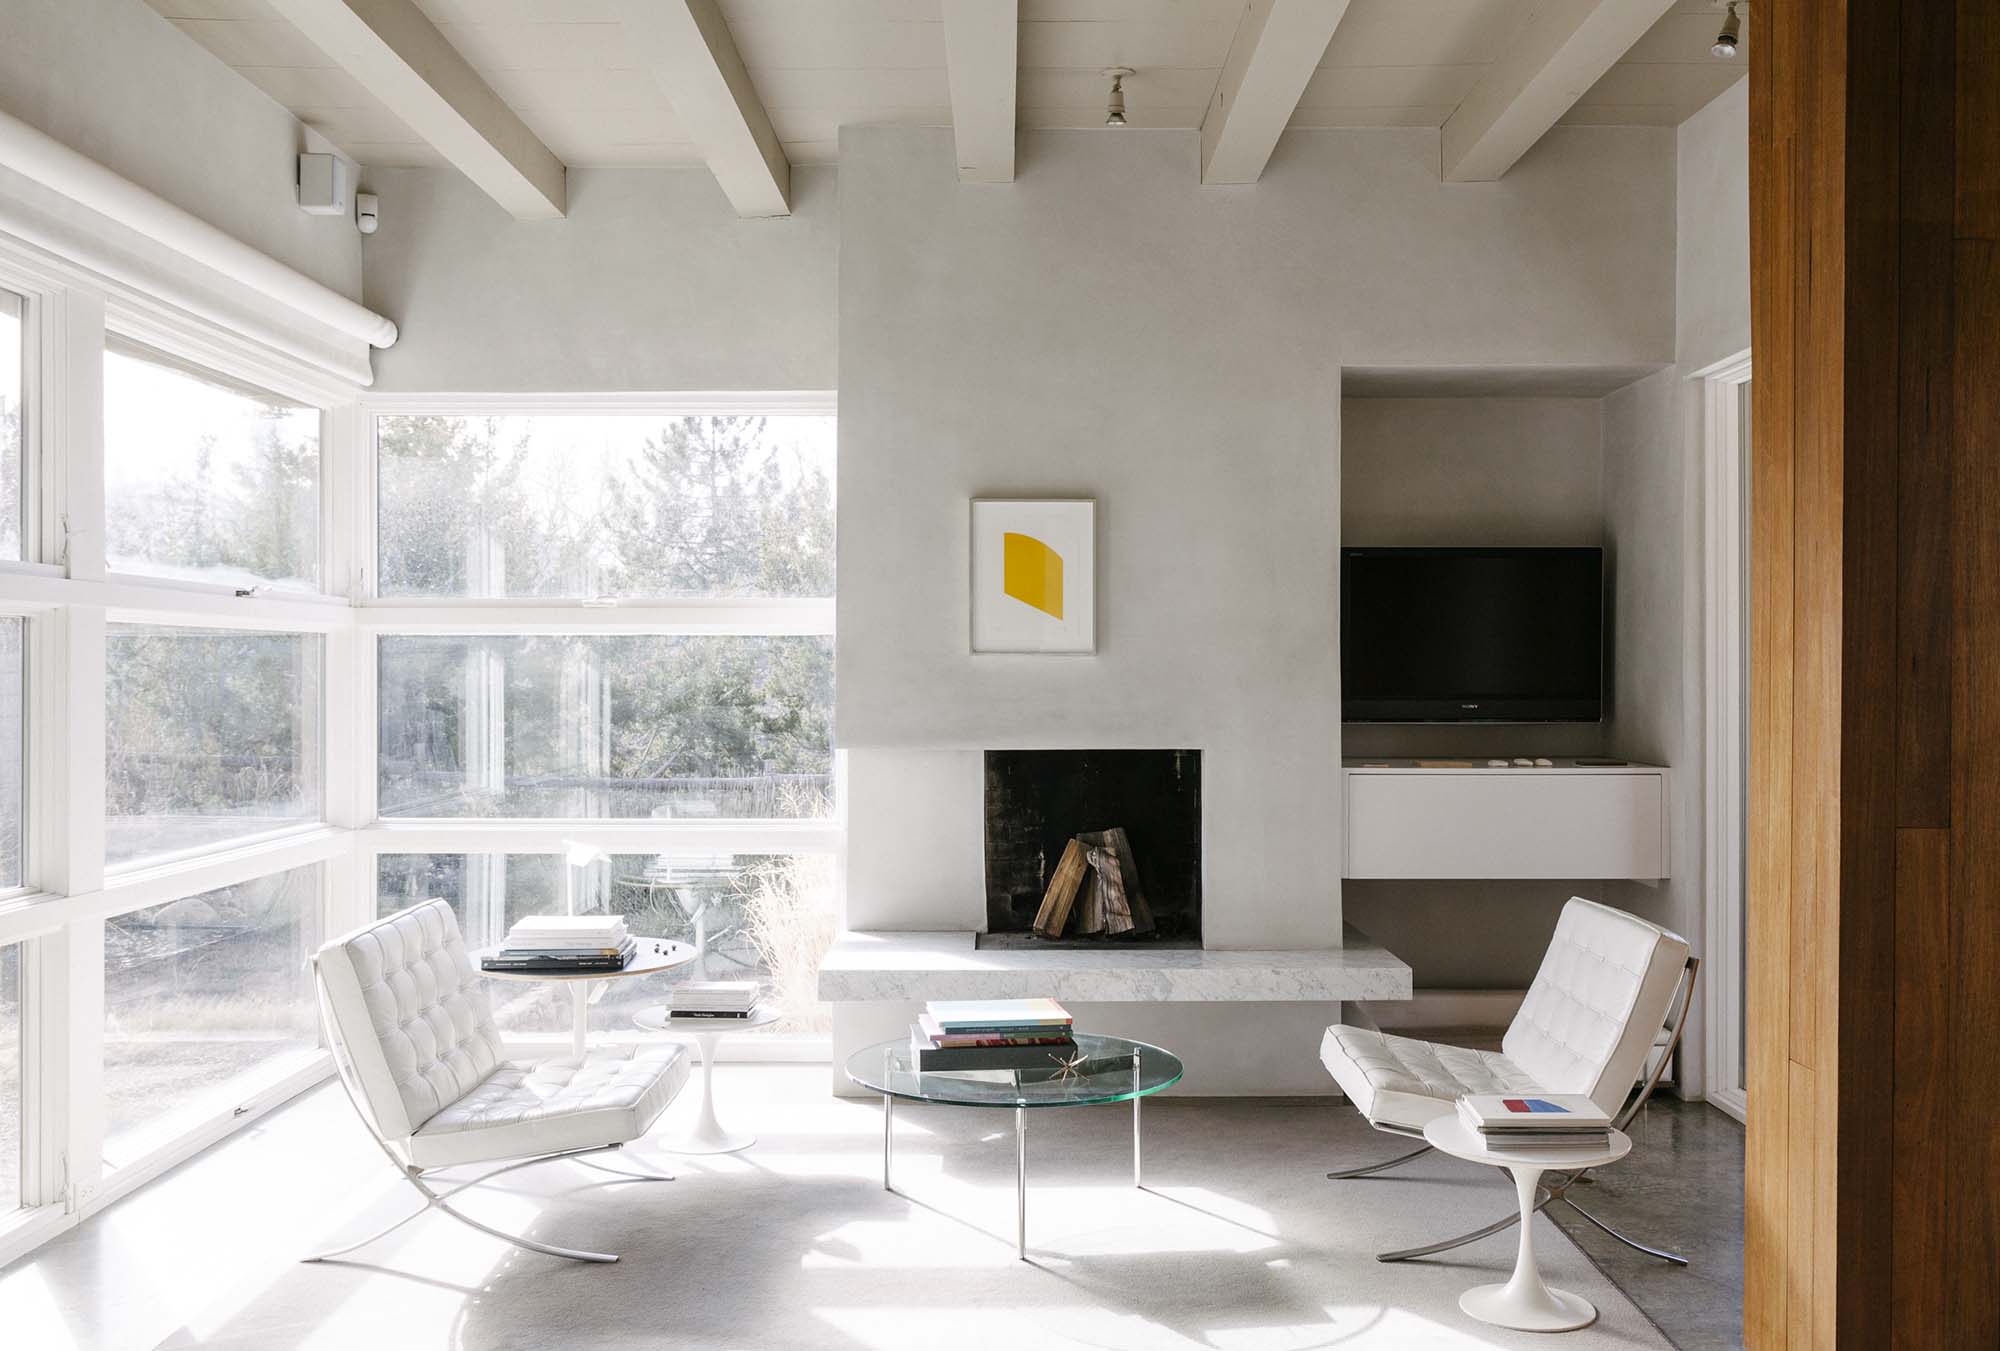 Santa Fe Residence | PC: Morgan Rachel Levy | Featured: Barcelona Chairs, Saarinen Side Tables